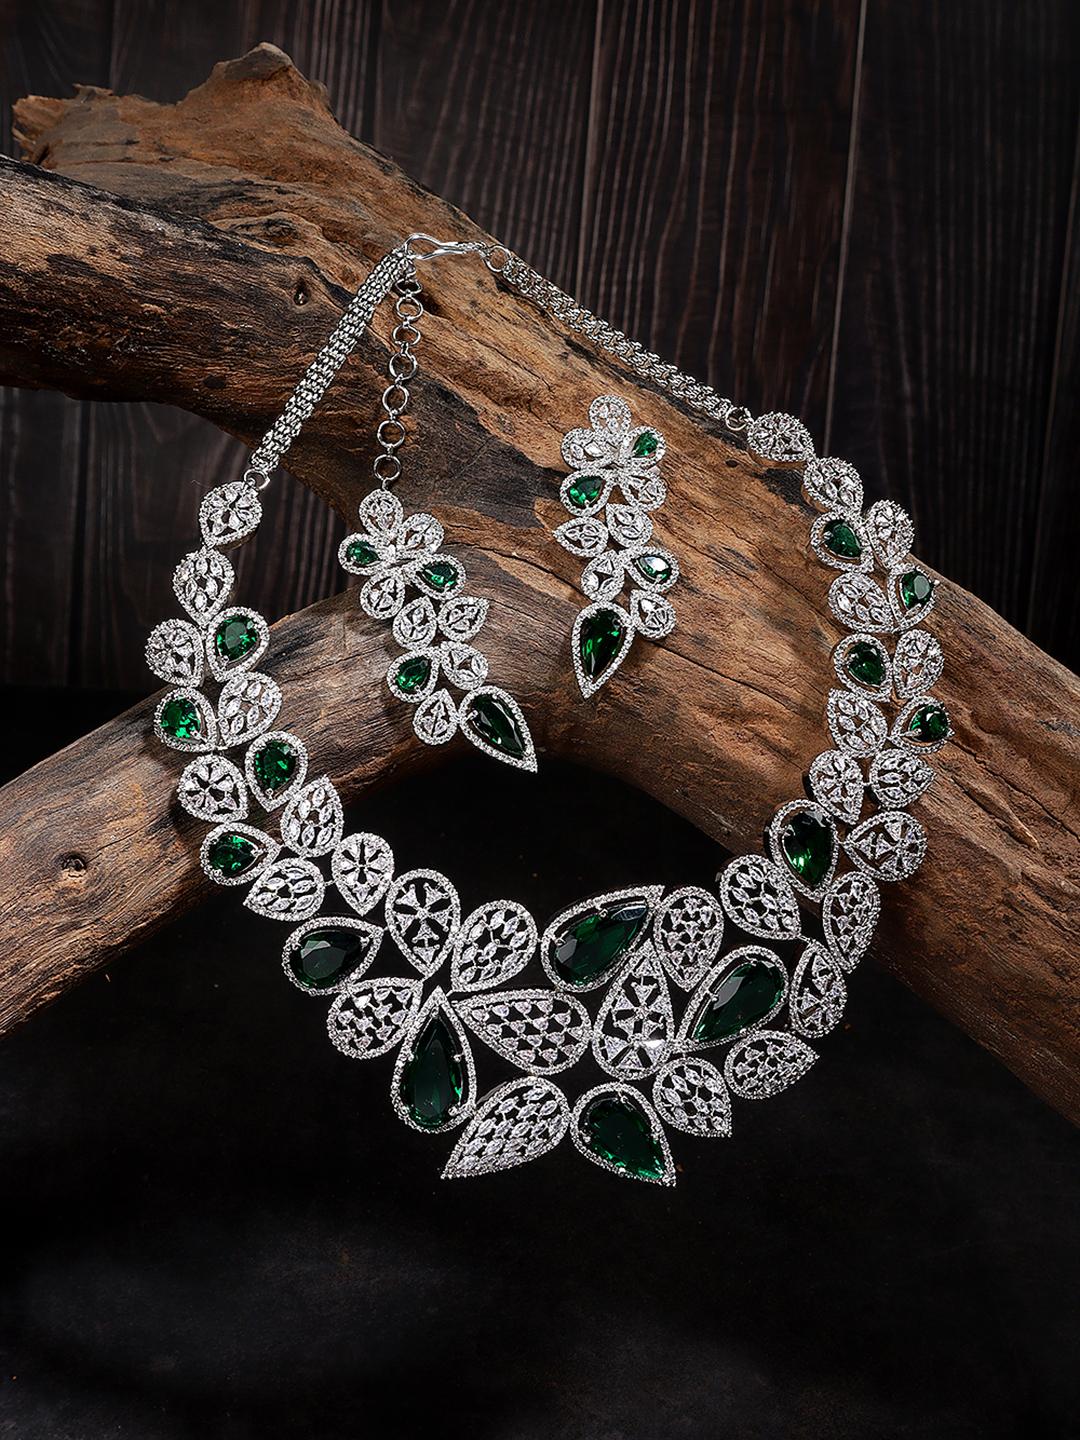 Glamorous Green Rhodium Plated American Diamond Necklace Set For Women